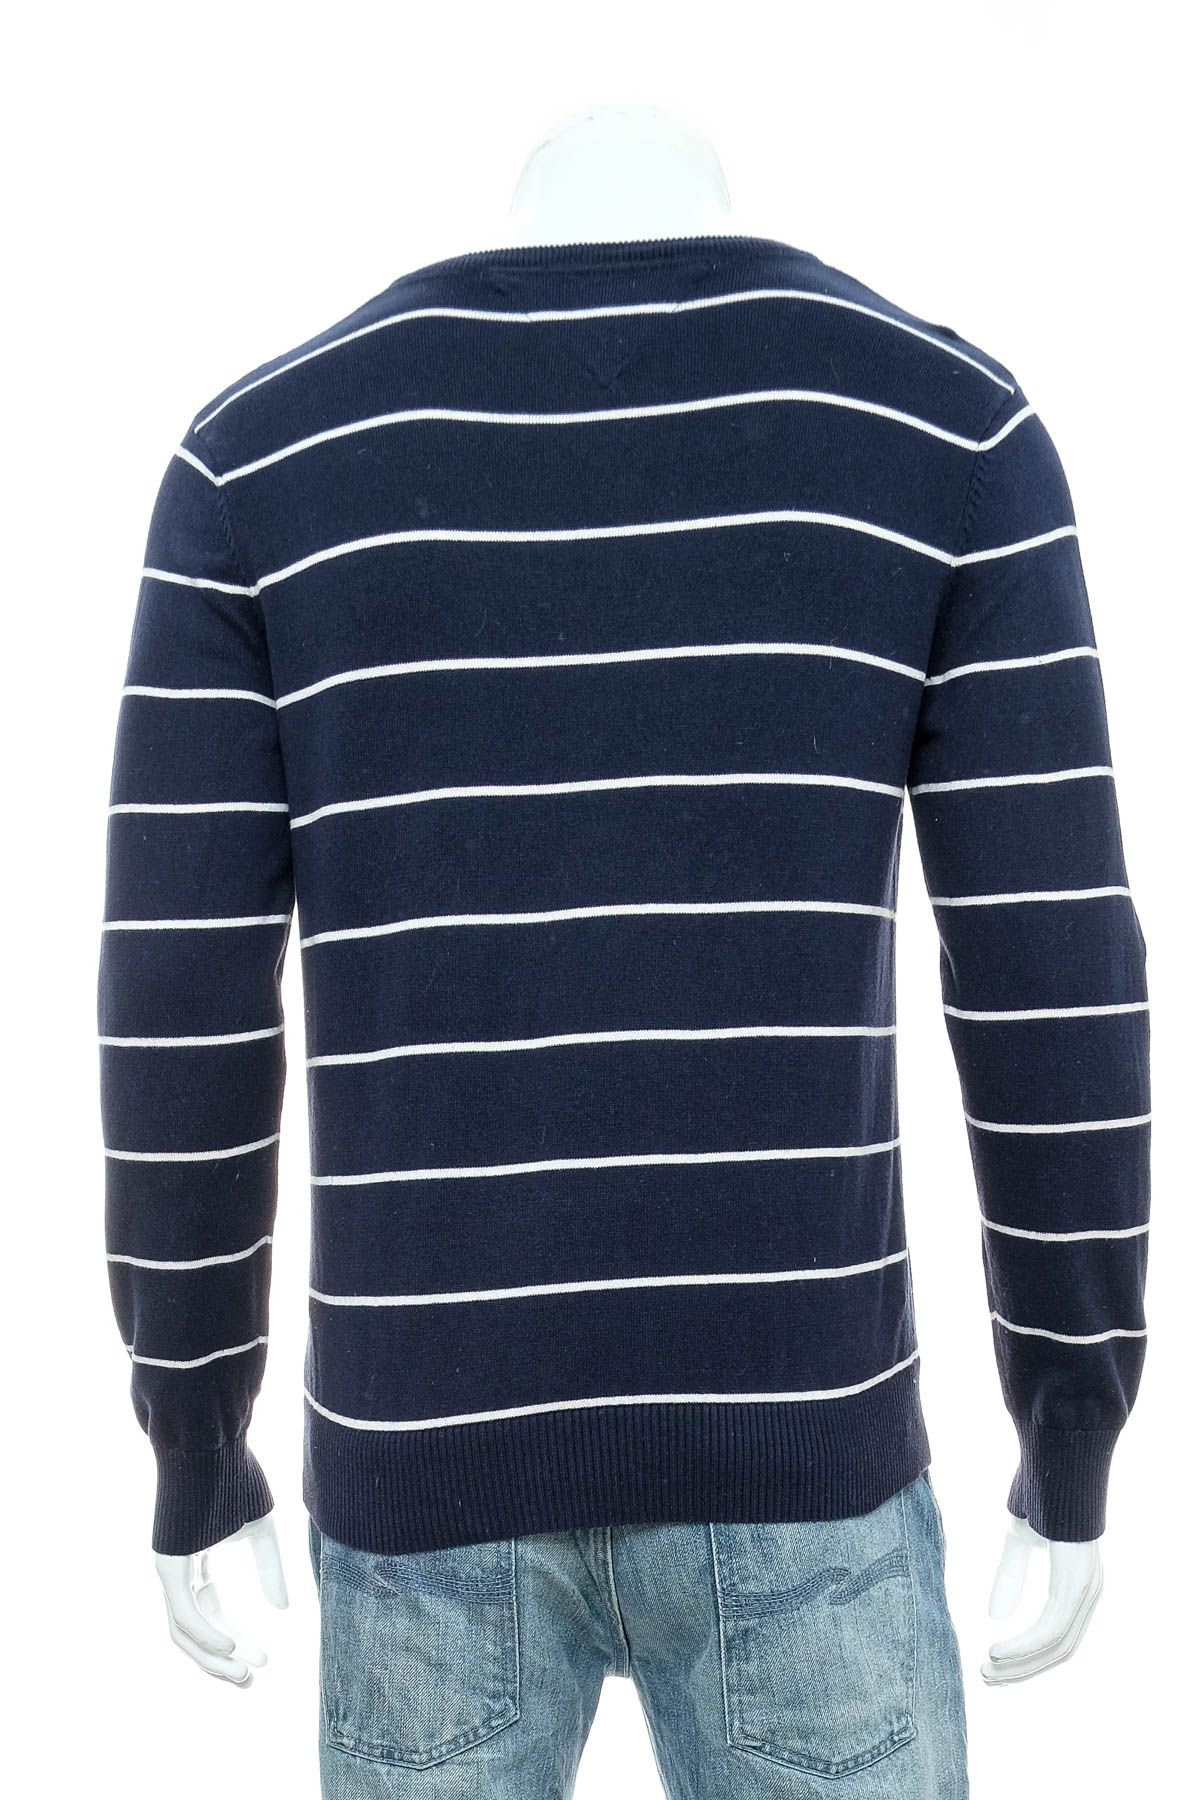 Men's sweater - TOMMY HILFIGER - 1